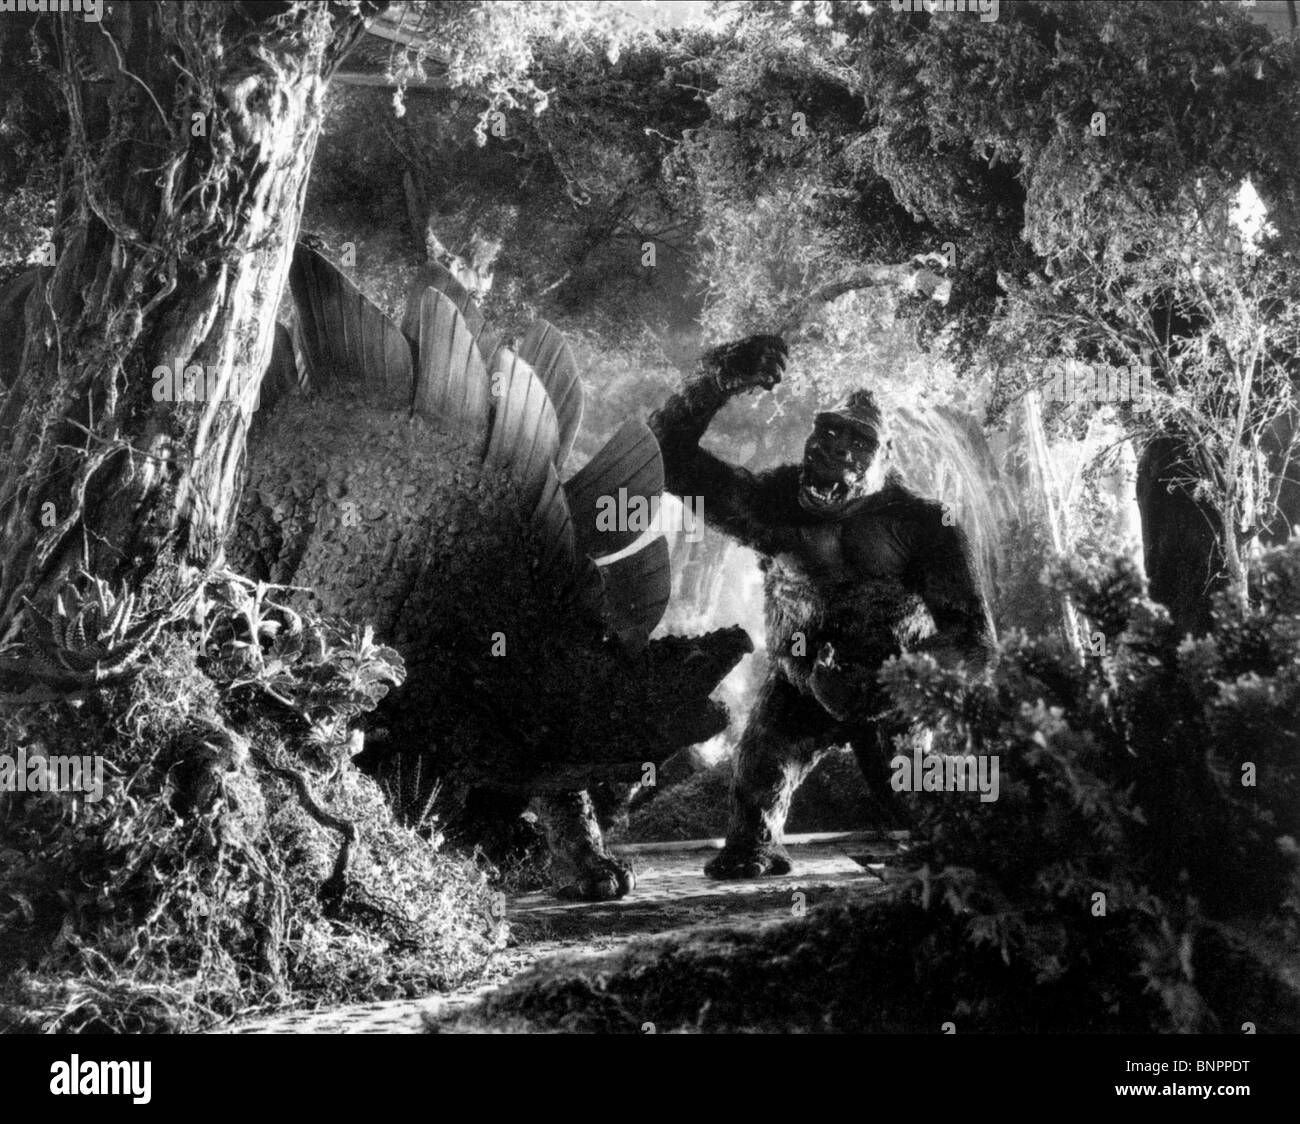 King kong dinosaur king kong hi-res stock photography and images - Alamy